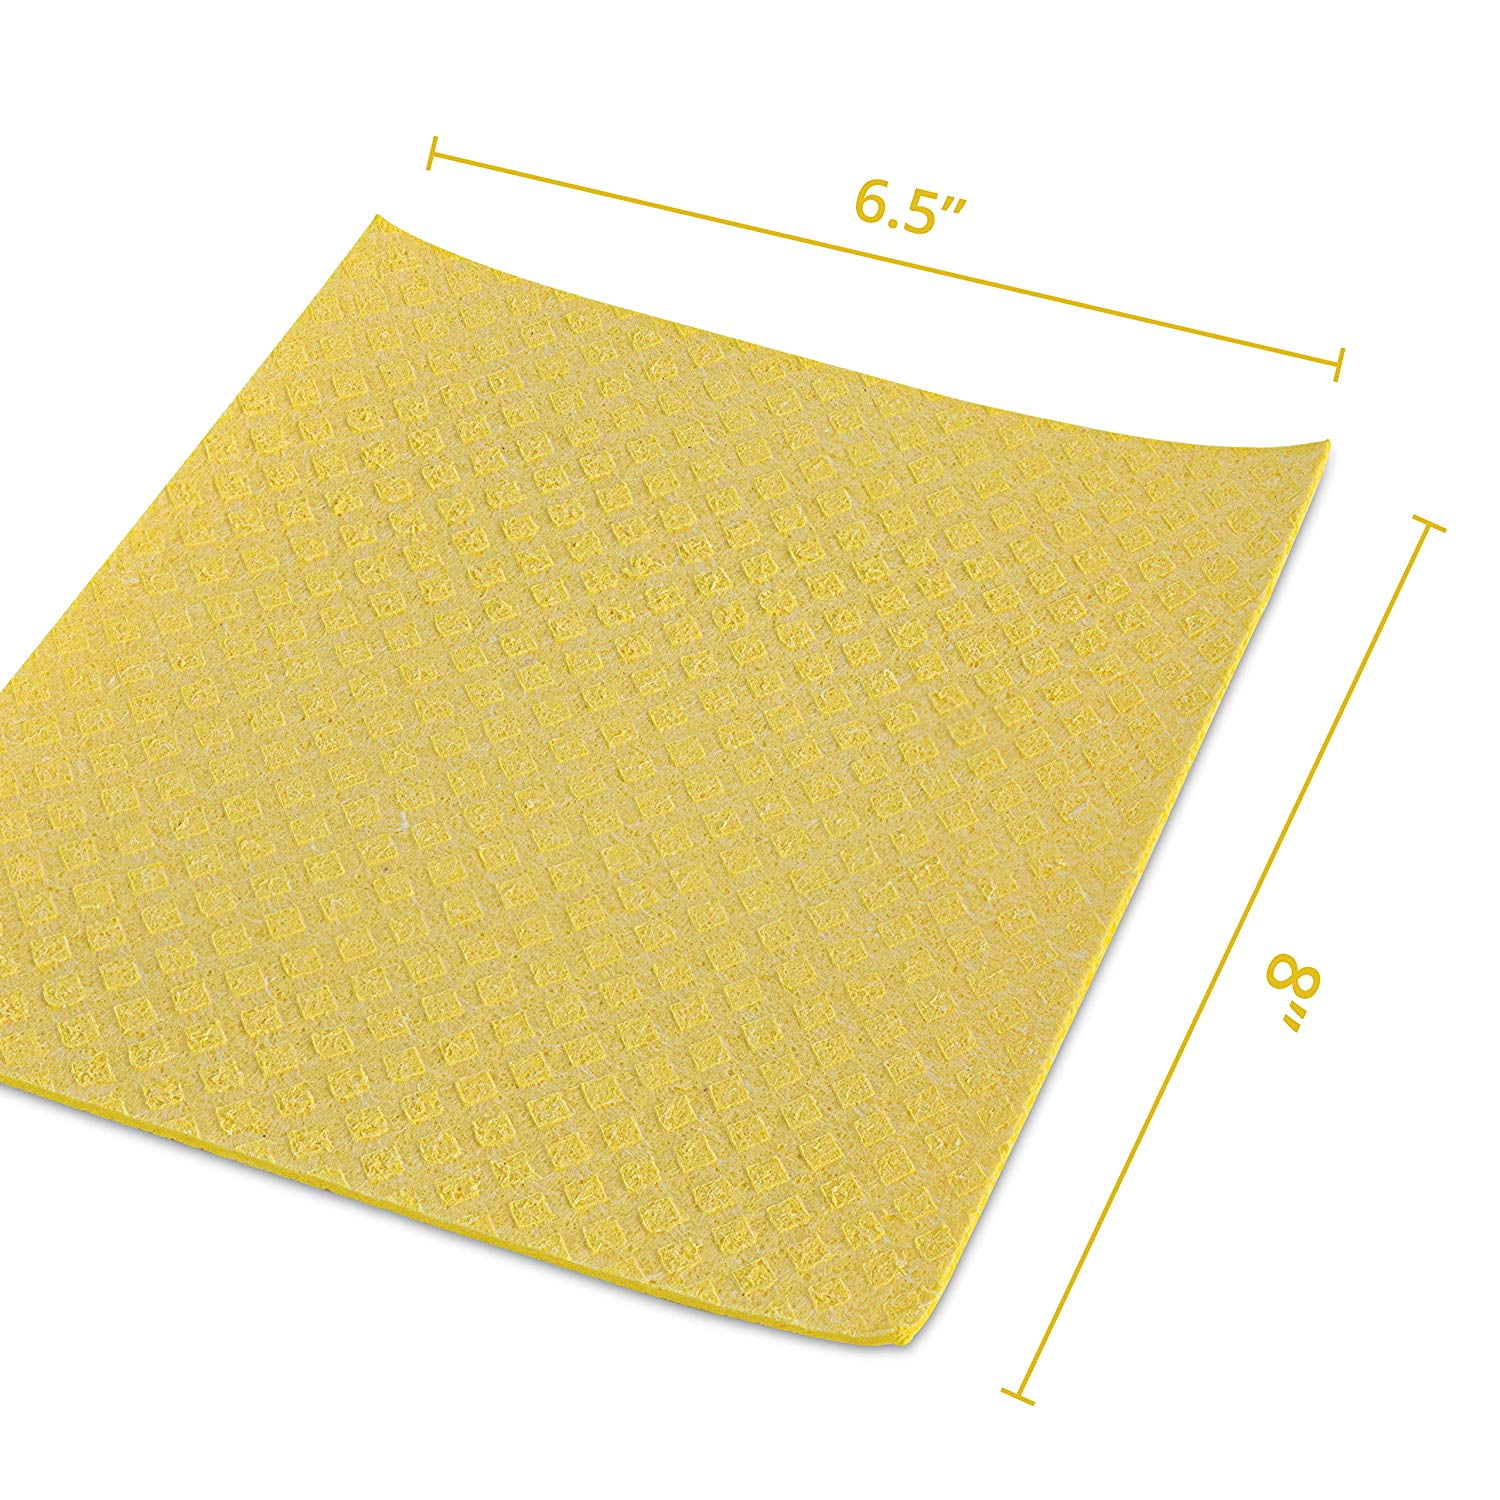 Swededishcloths Swedish Dishcloth (Lemon Lime) Set of 3 Each Paper Towel Replacements Eco Friendly Reusable Absorbent Cleaning Sponge Cloths